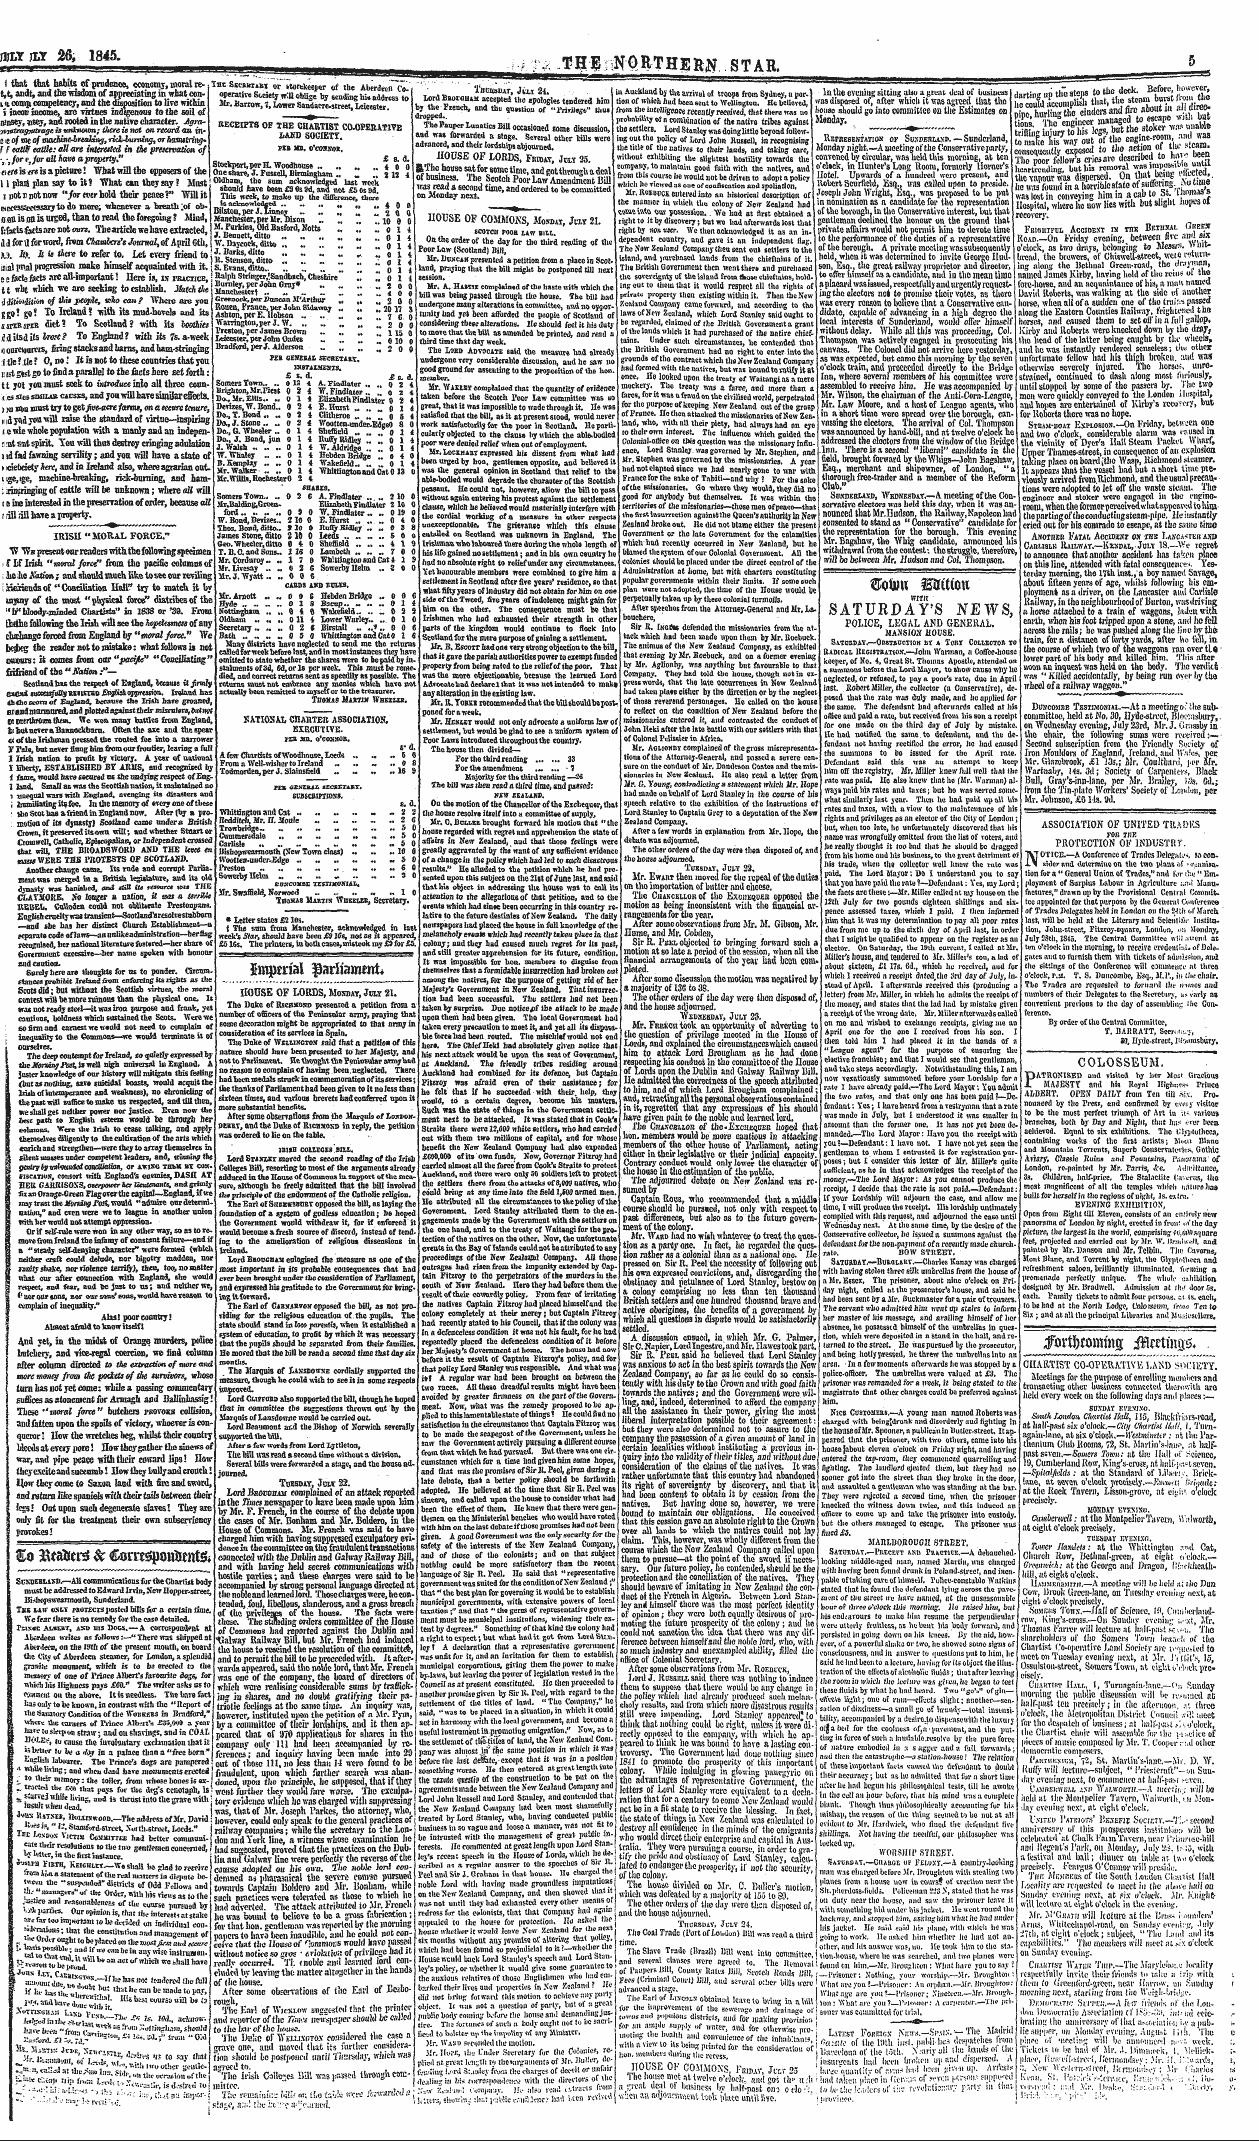 Northern Star (1837-1852): jS F Y, 4th edition - Latkst Fonniox Nkw-J.-Simis. •—The Madri...